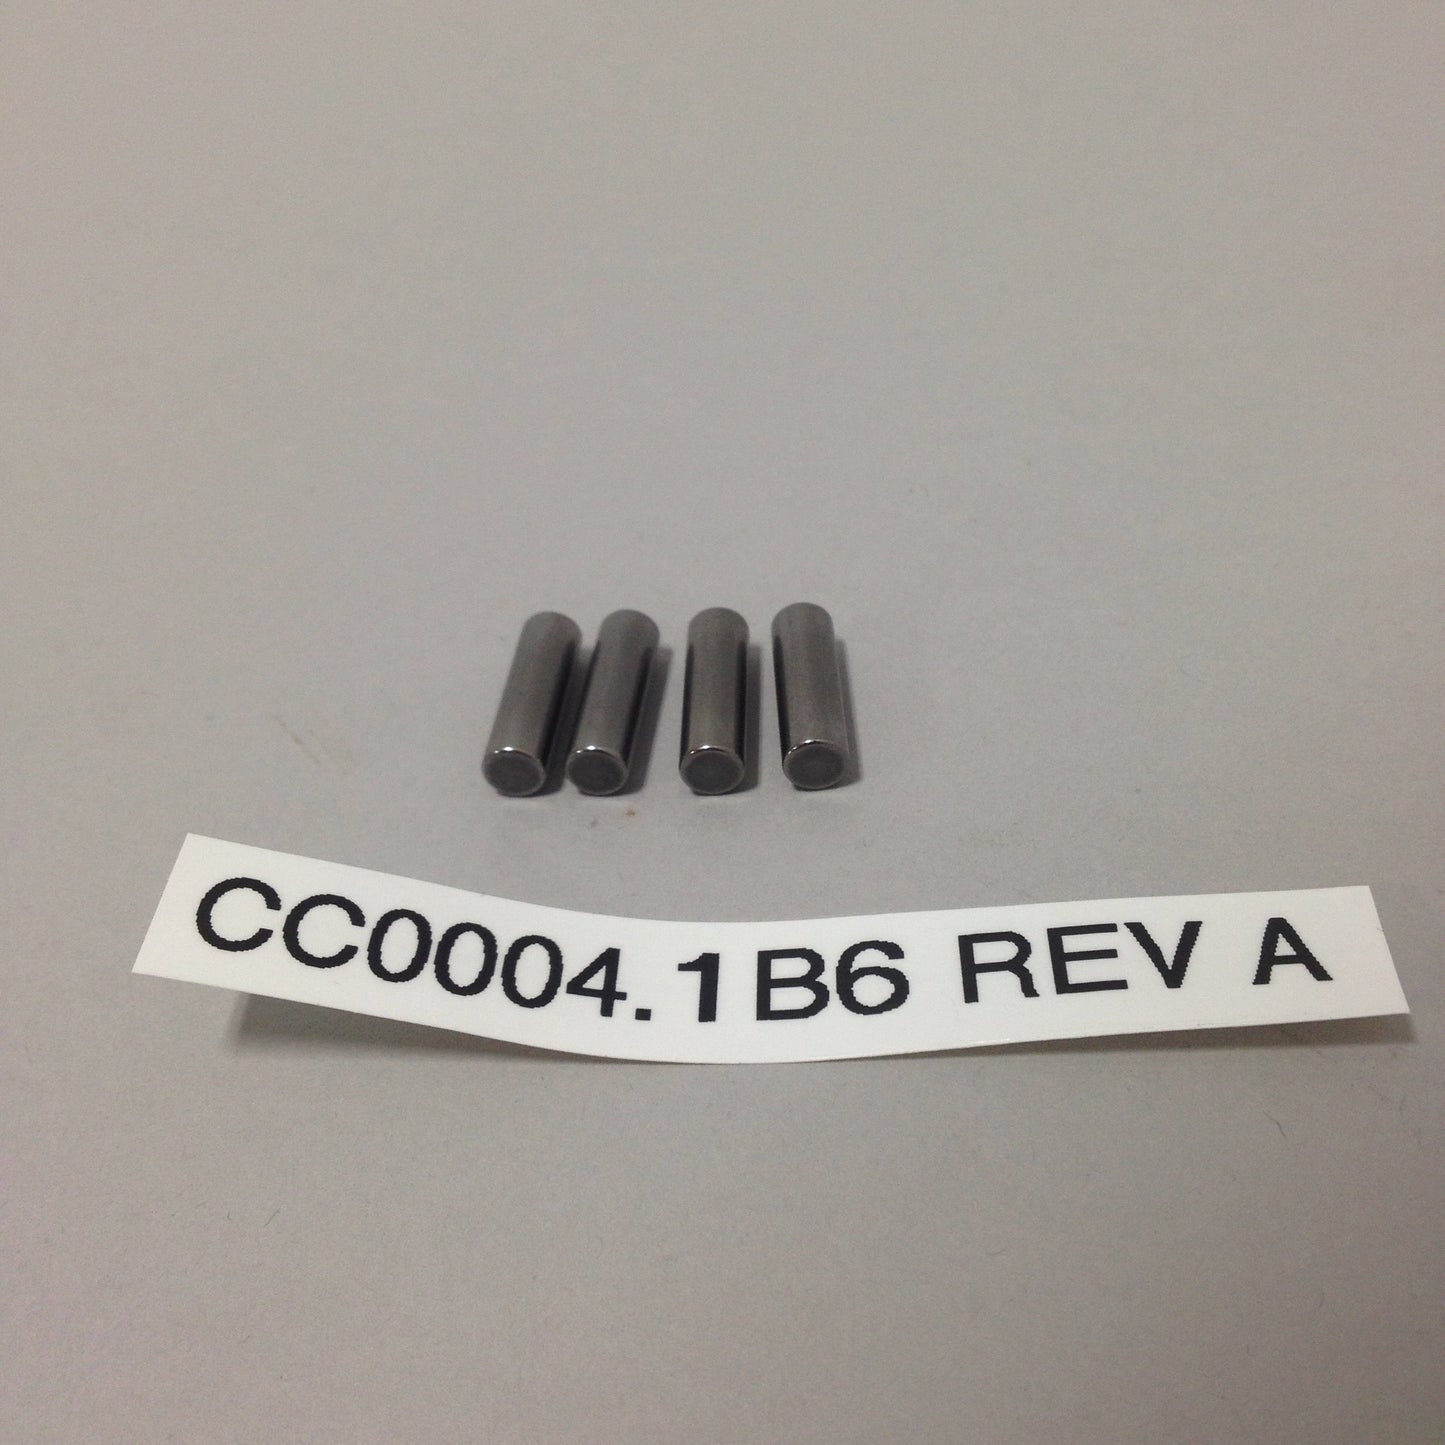 NEEDLE PIN 5X16,8 G2 DIN 5402 (CC0004.1B6 Rev A)